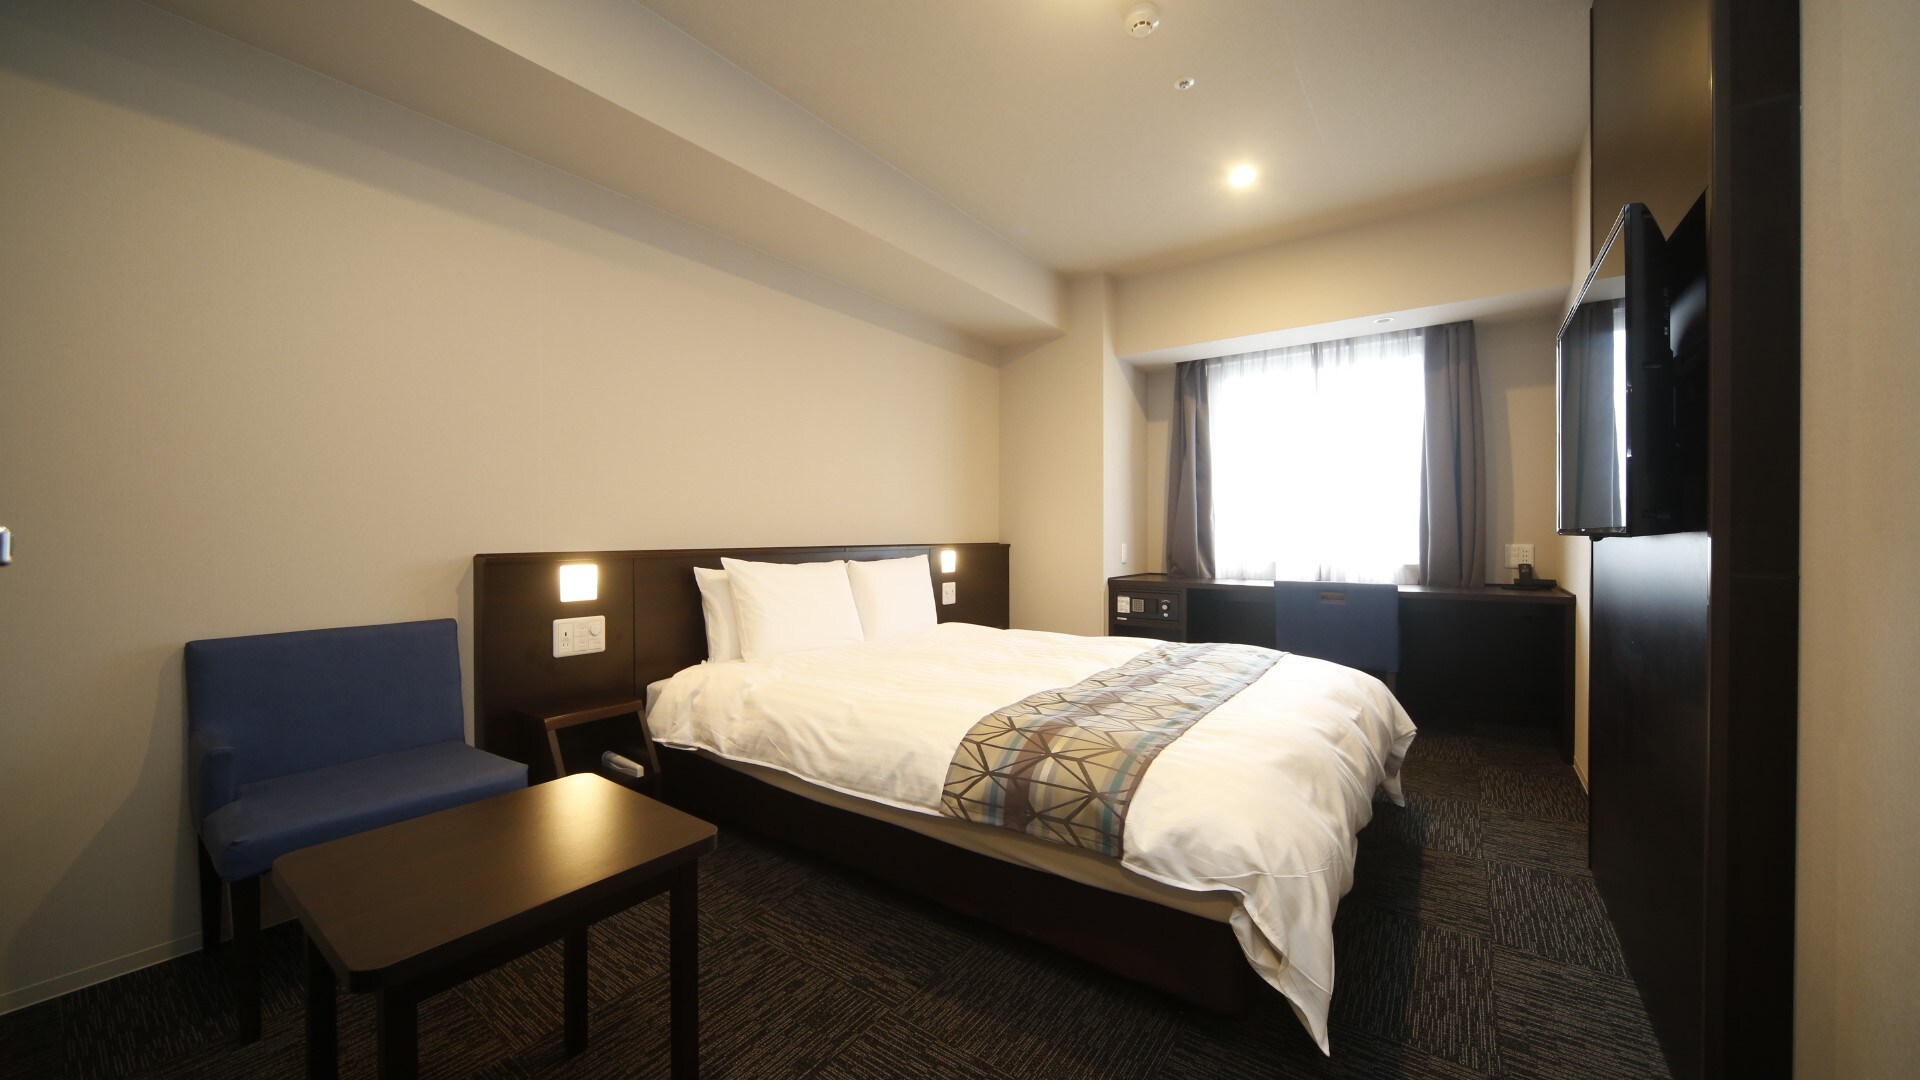 Deluxe Queen Room 22.2 square meters Bed size 160×195 cm Airweave